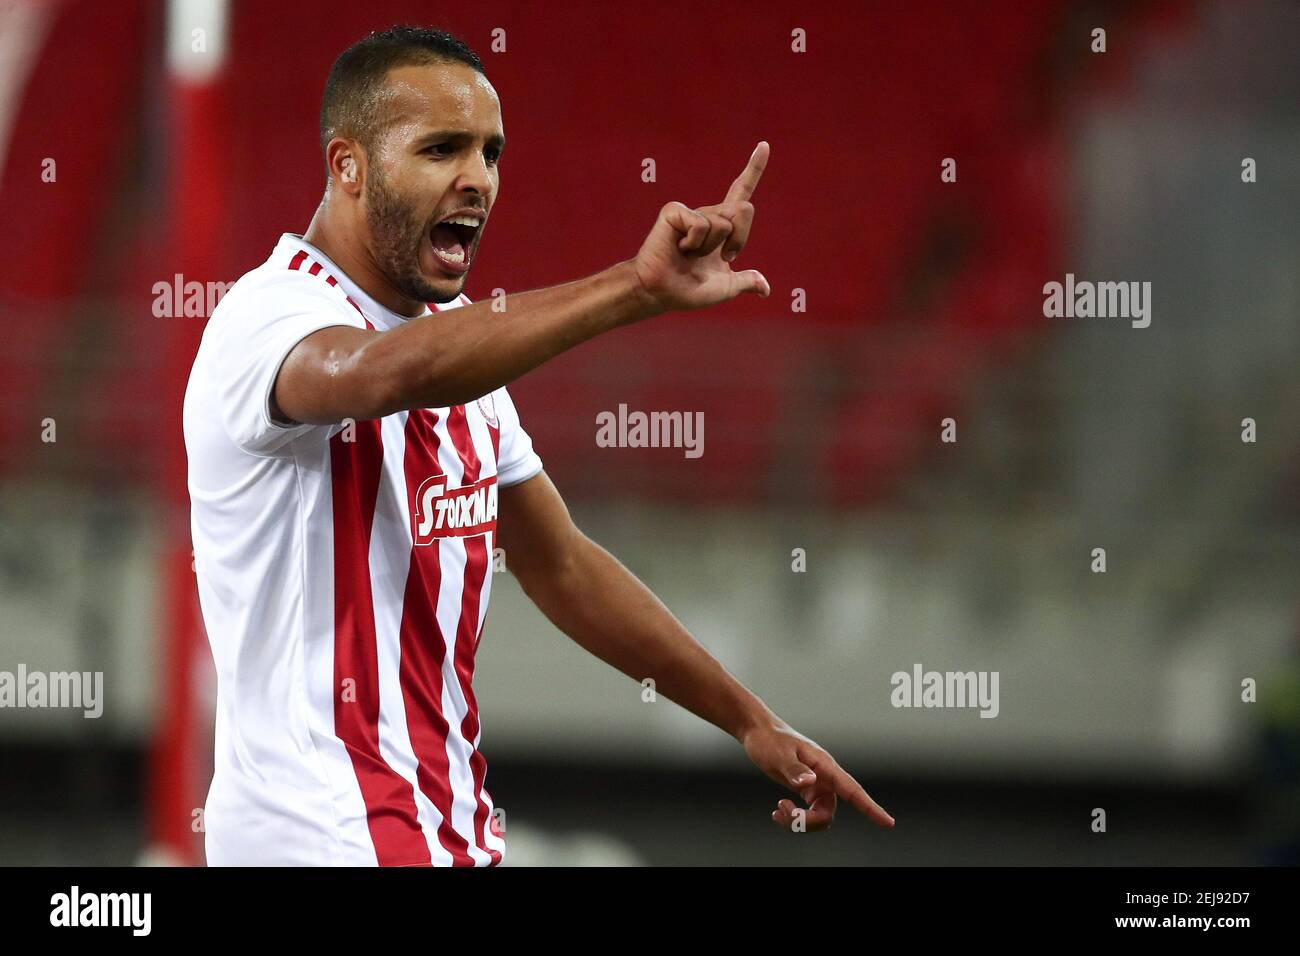 Youssef El Arabi of Olympiacos celebrates his goal during the match  Olympiakos v Panathinaikos, of Superleague,